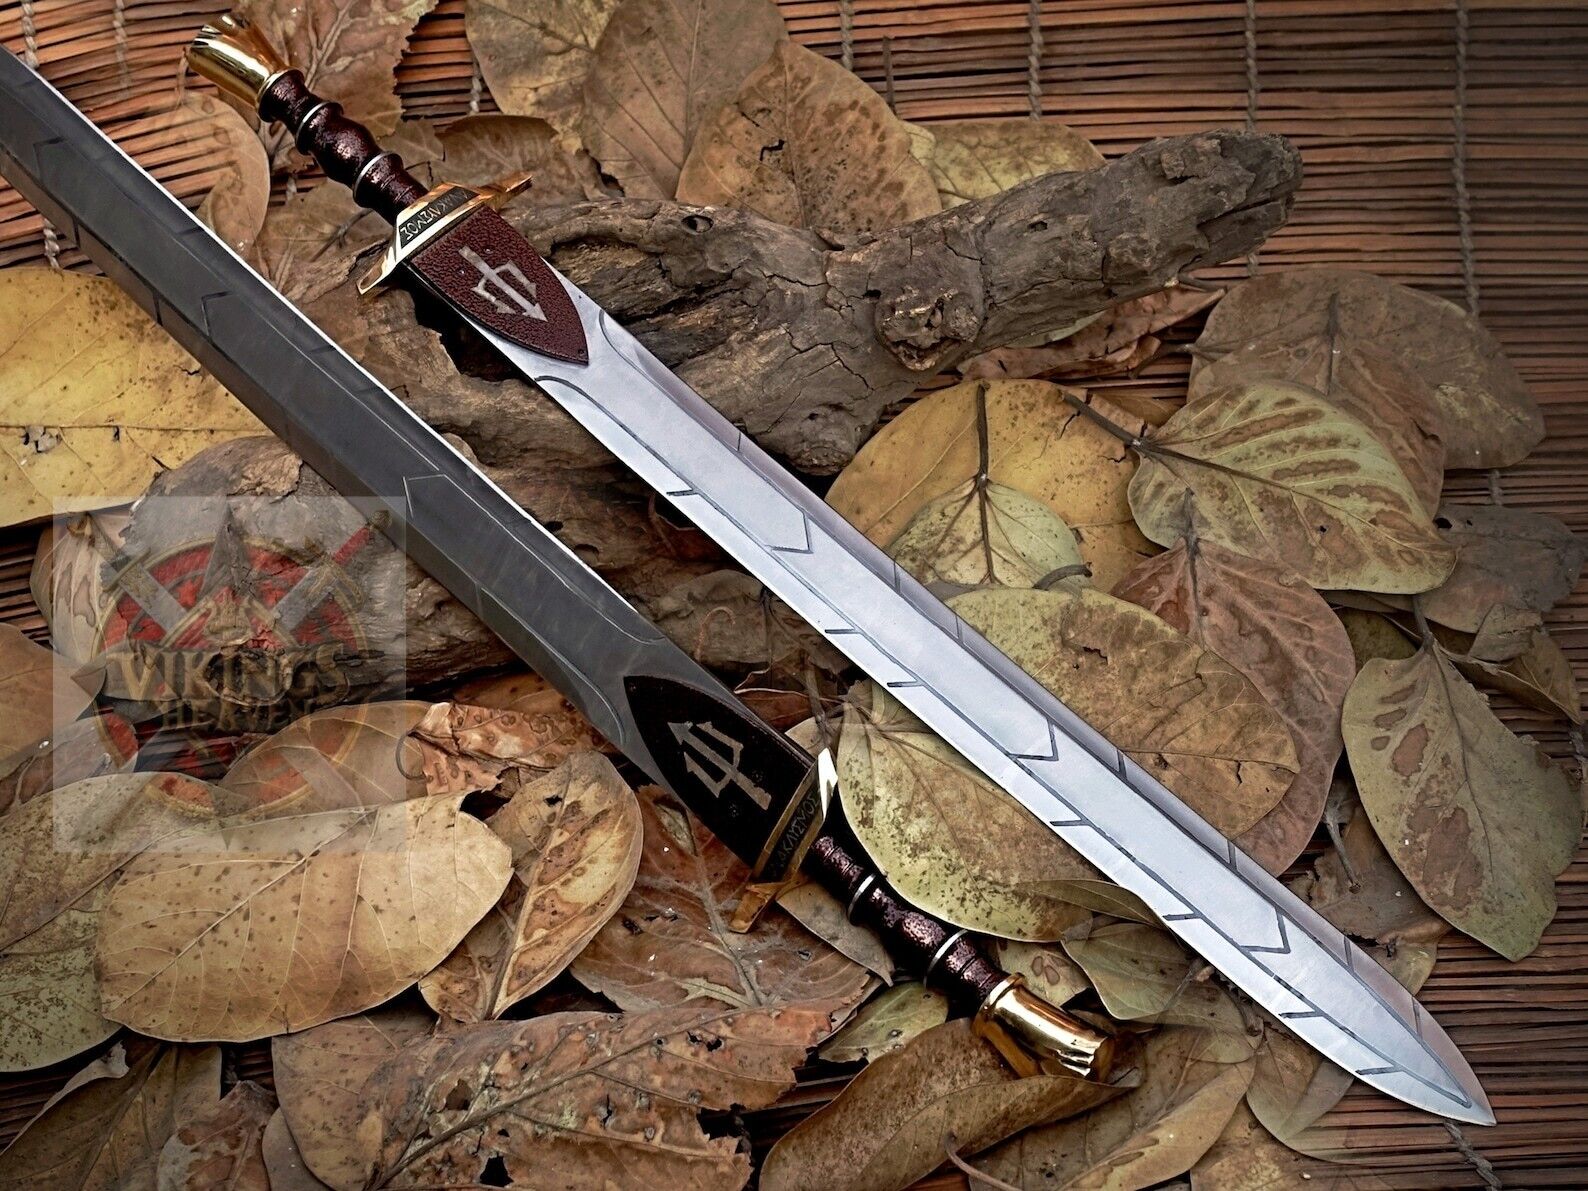 Riptide sword of Percy Jackson Anaklusmos sword Percy Jackson and the Olympians